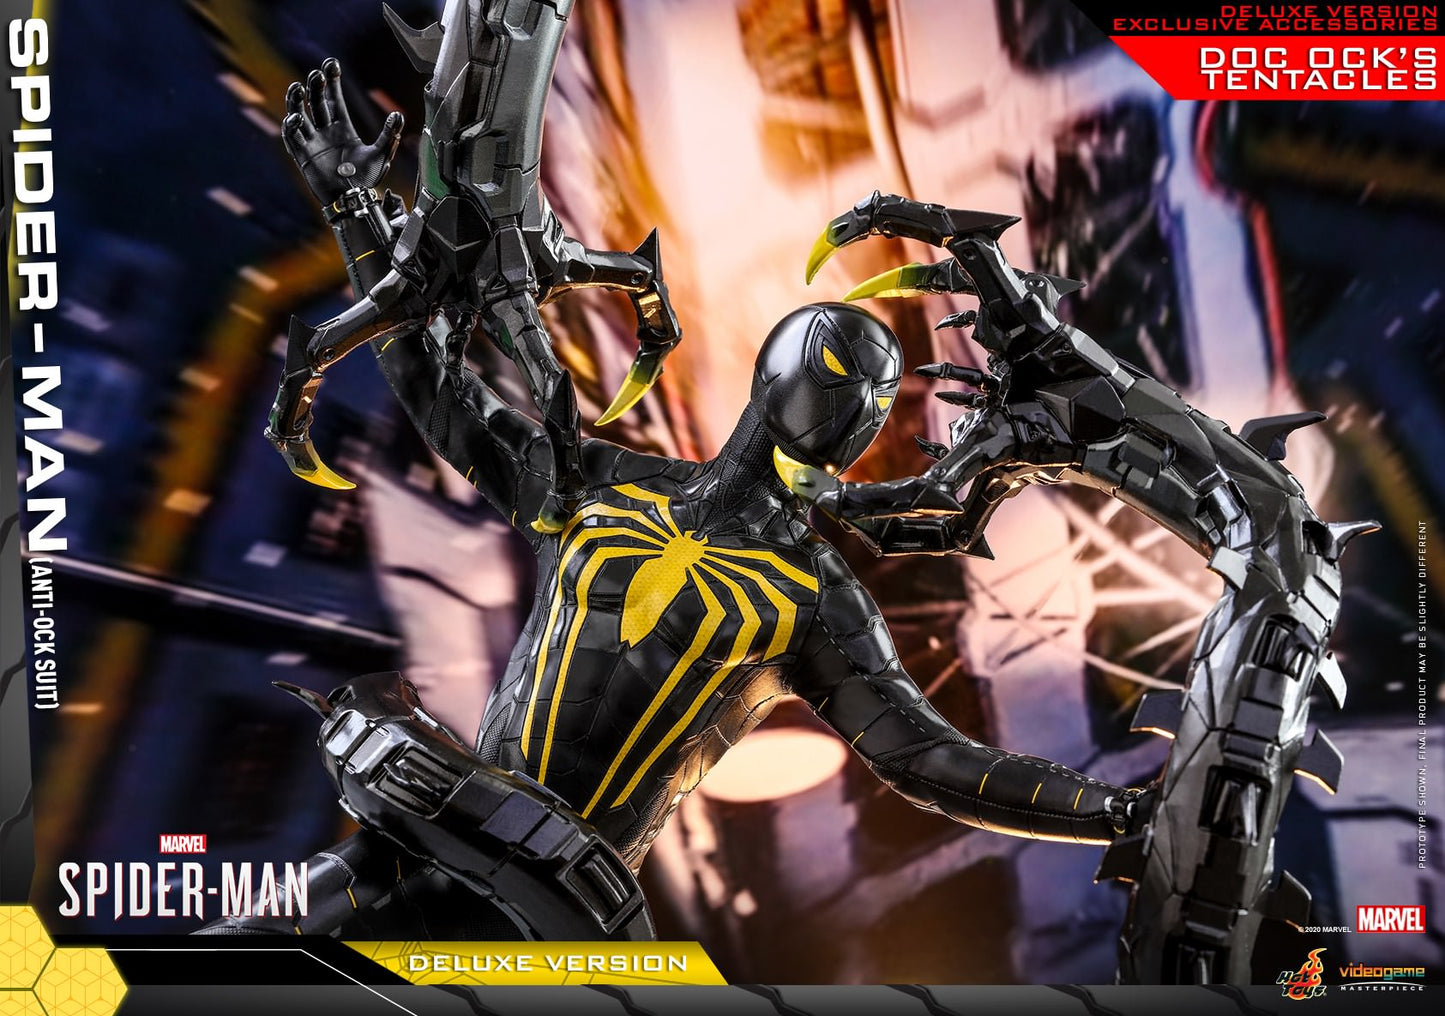 Spider-Man Anti-Ock Suit Deluxe 1/6 - Marvel's Spider-Man Hot Toys